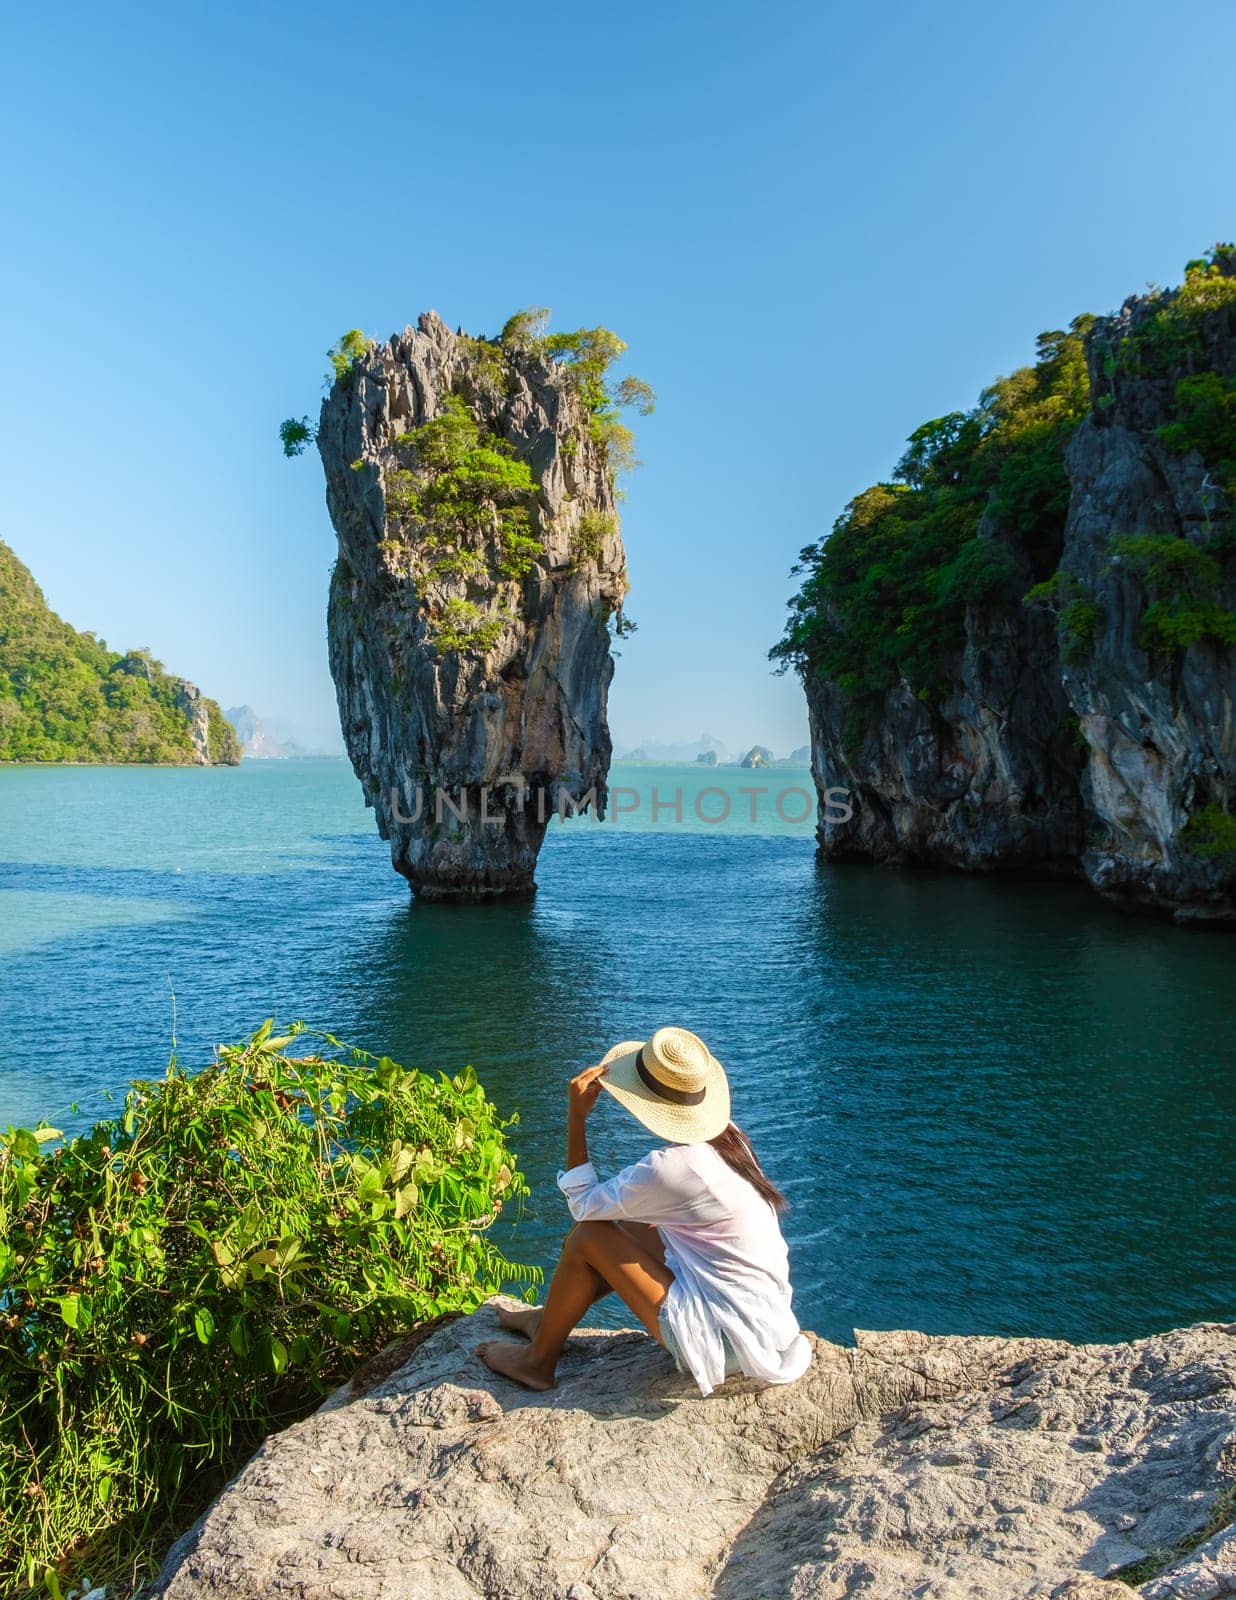 James Bond Island Phangnga Bay Thailand, Asian woman visits the Island near Phuket Thailand, women on a boat trip at Phangnga Bay Thailand